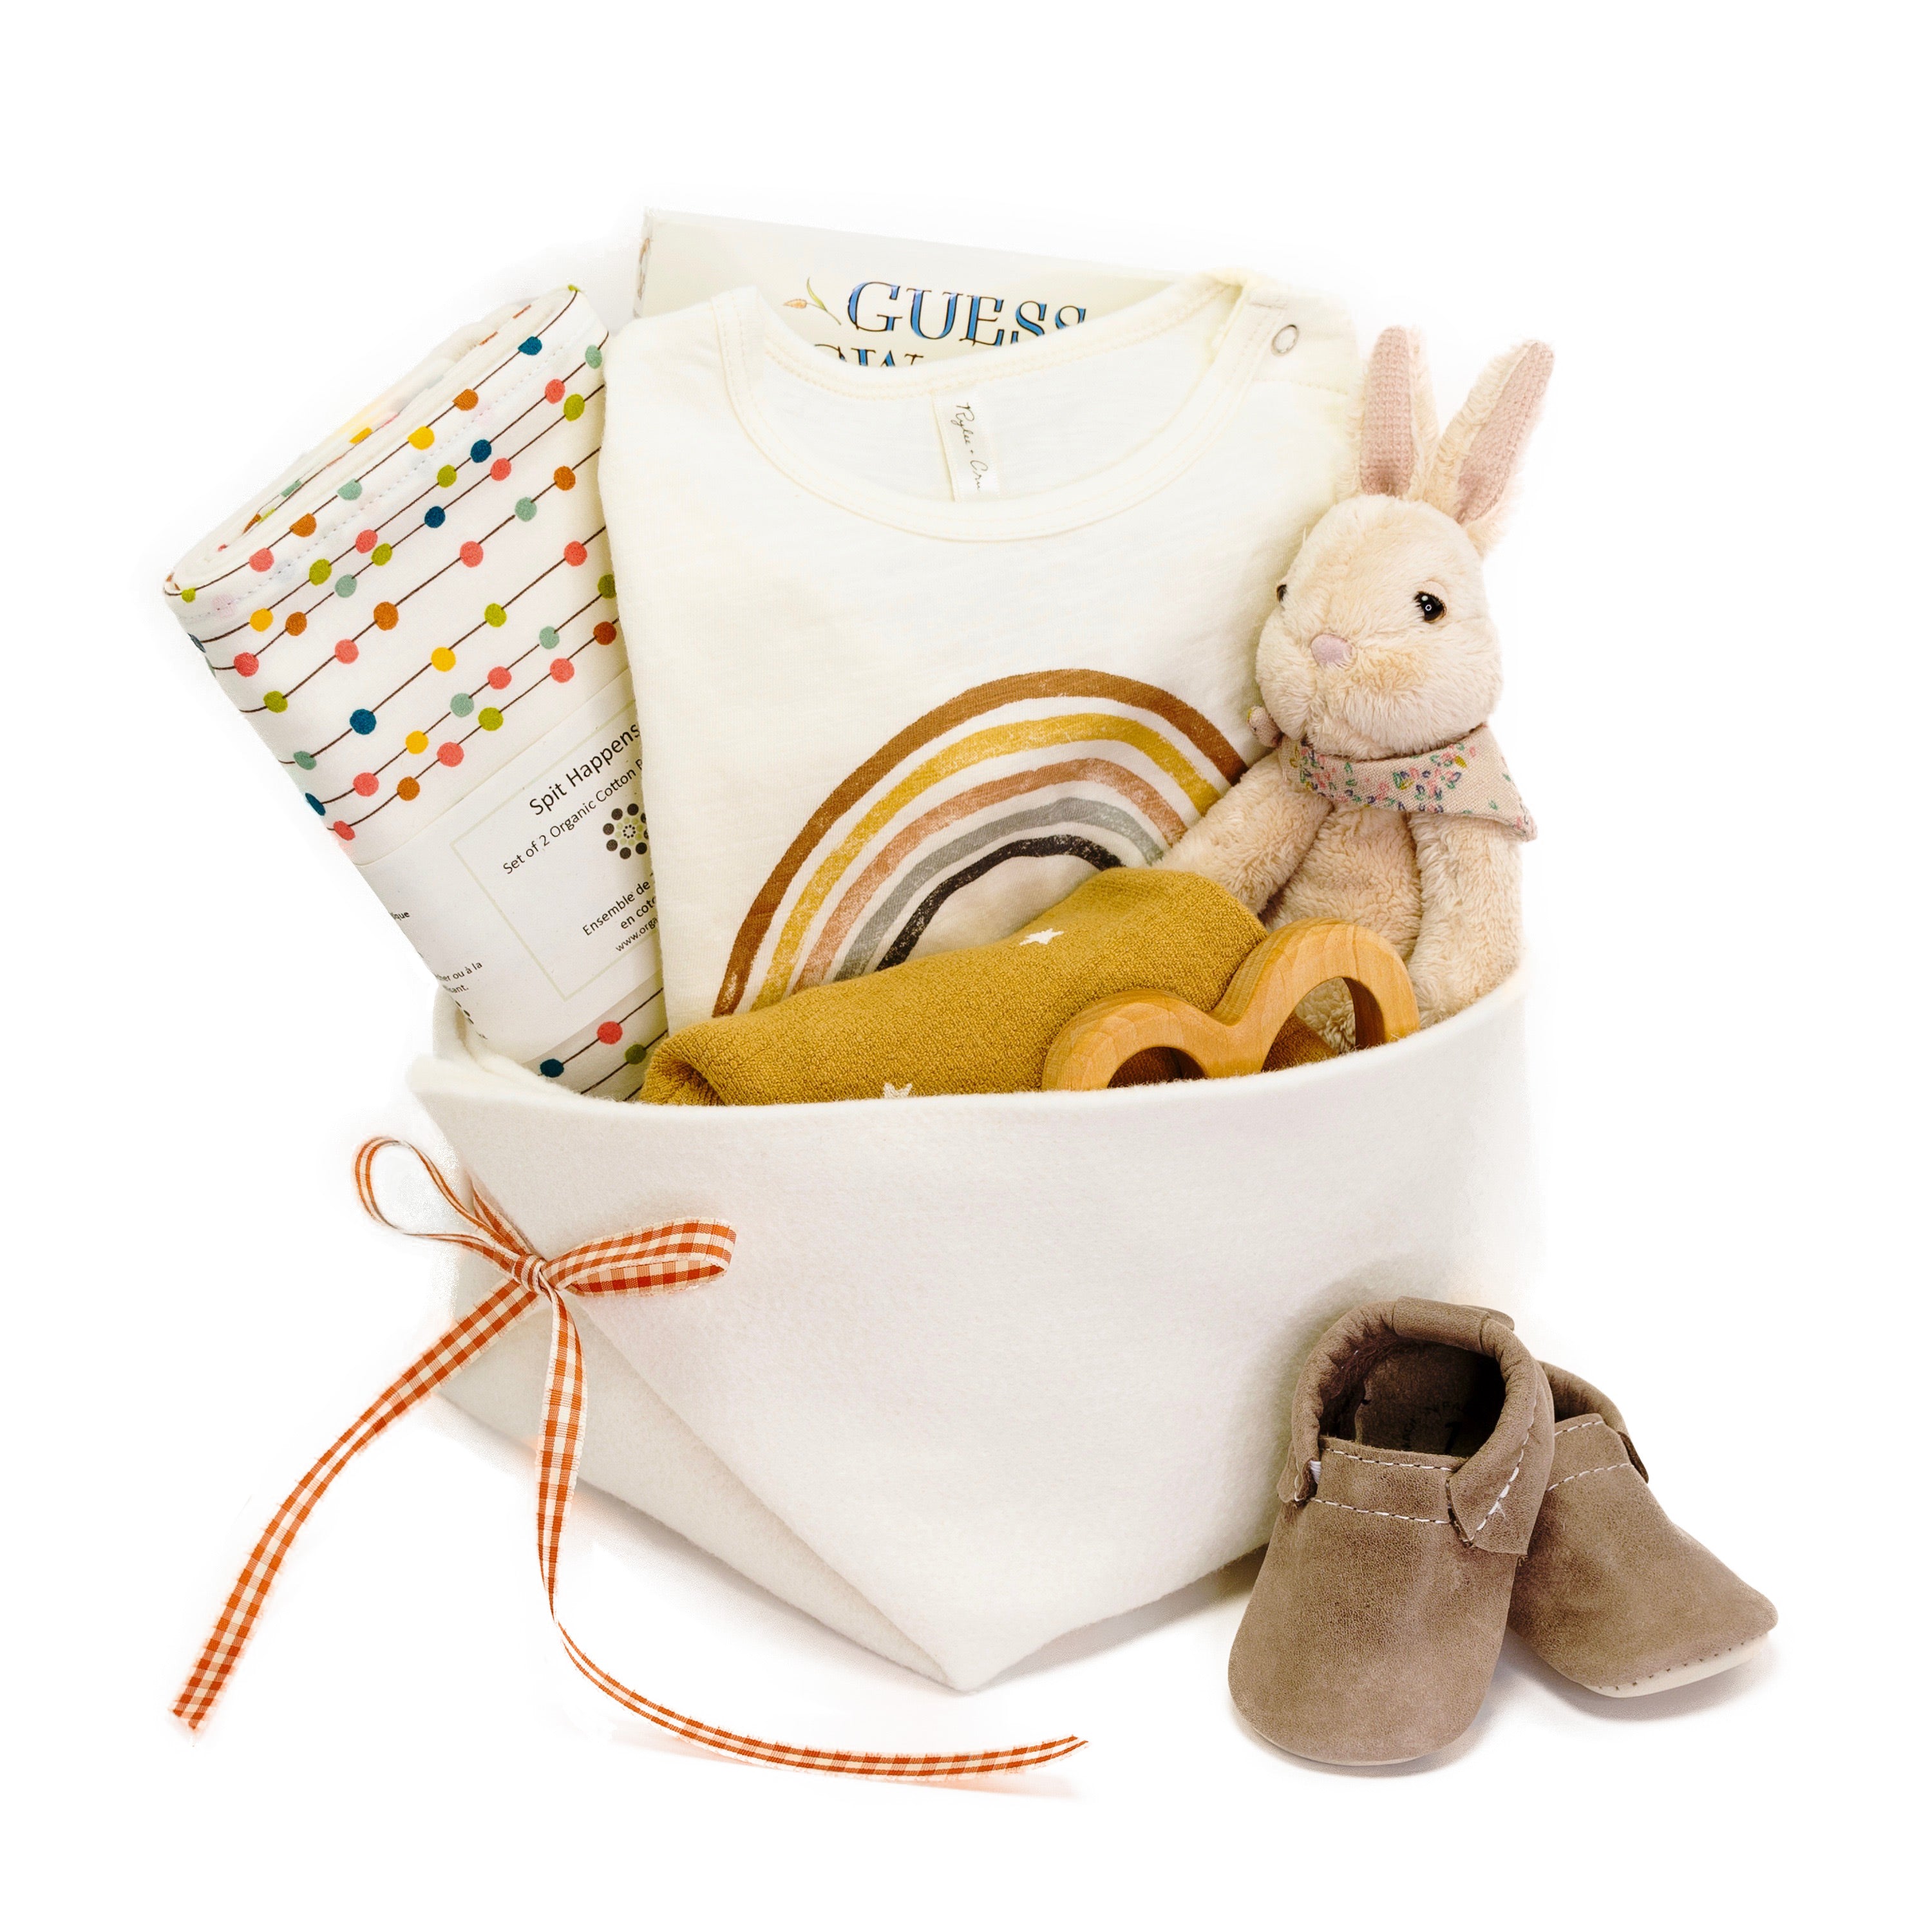 Designer Baby Gifts at Bonjour Baby Baskets